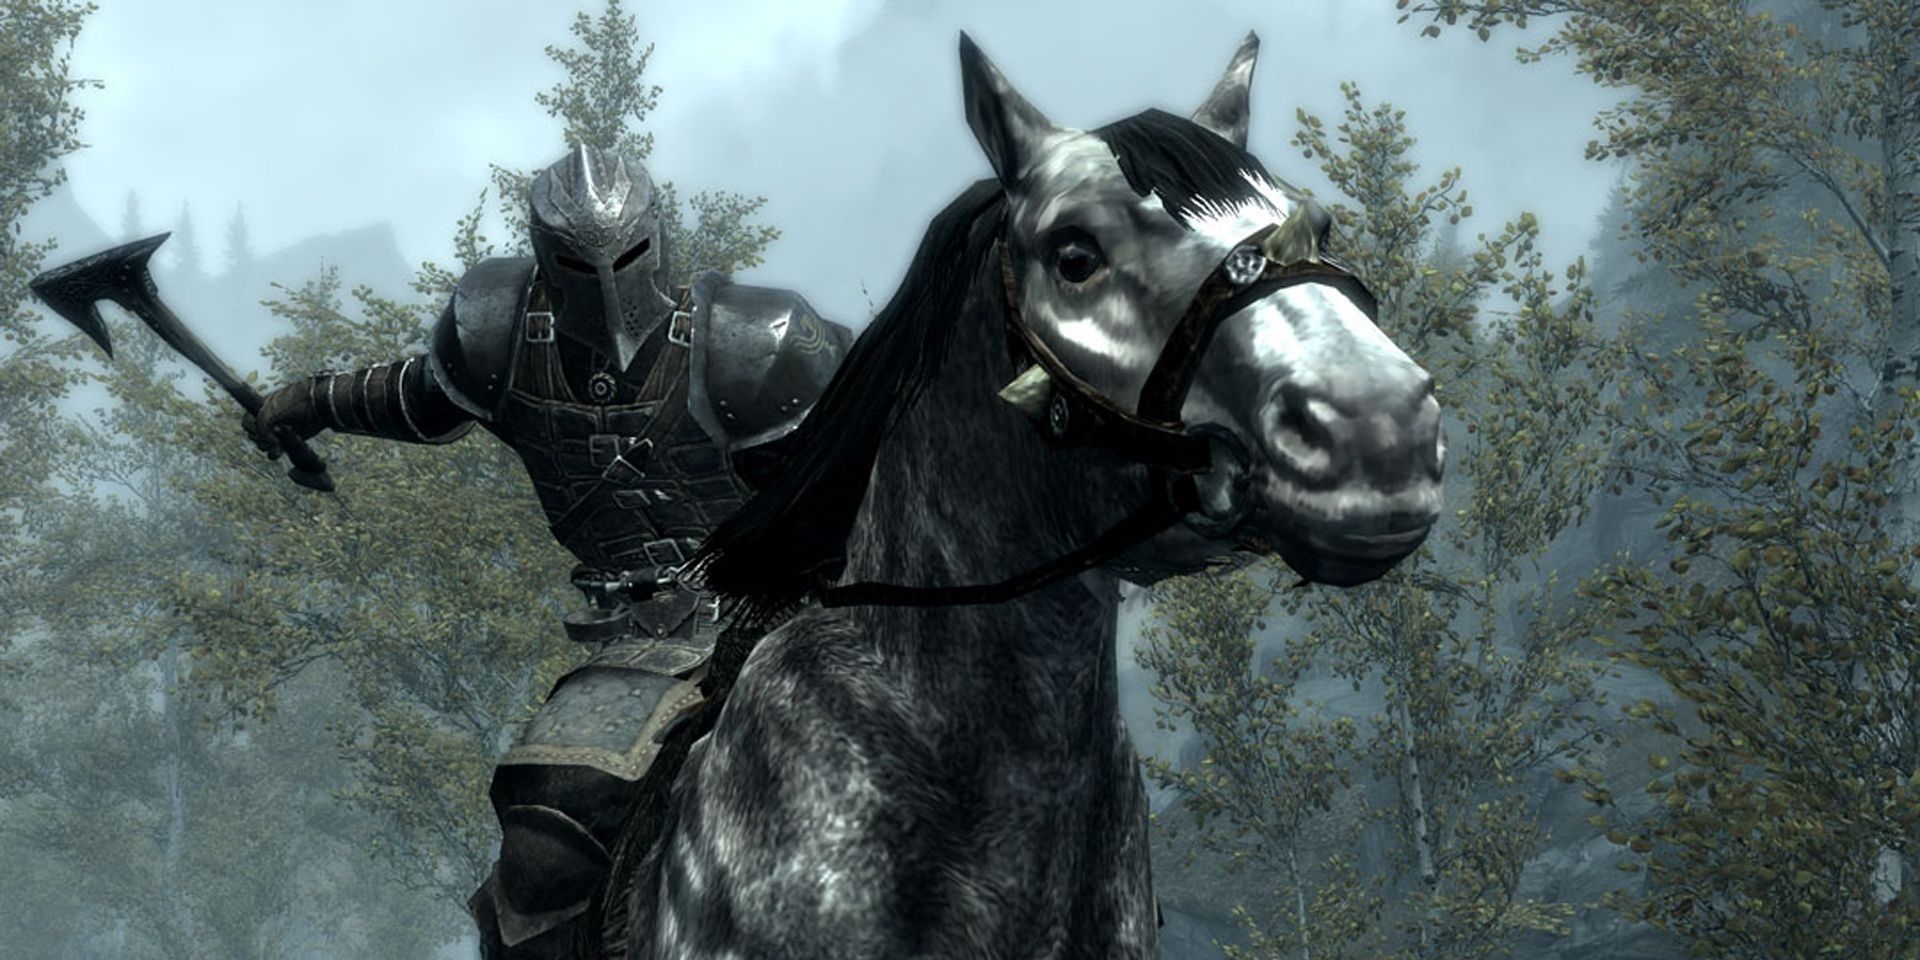 Riding a horse in Skyrim